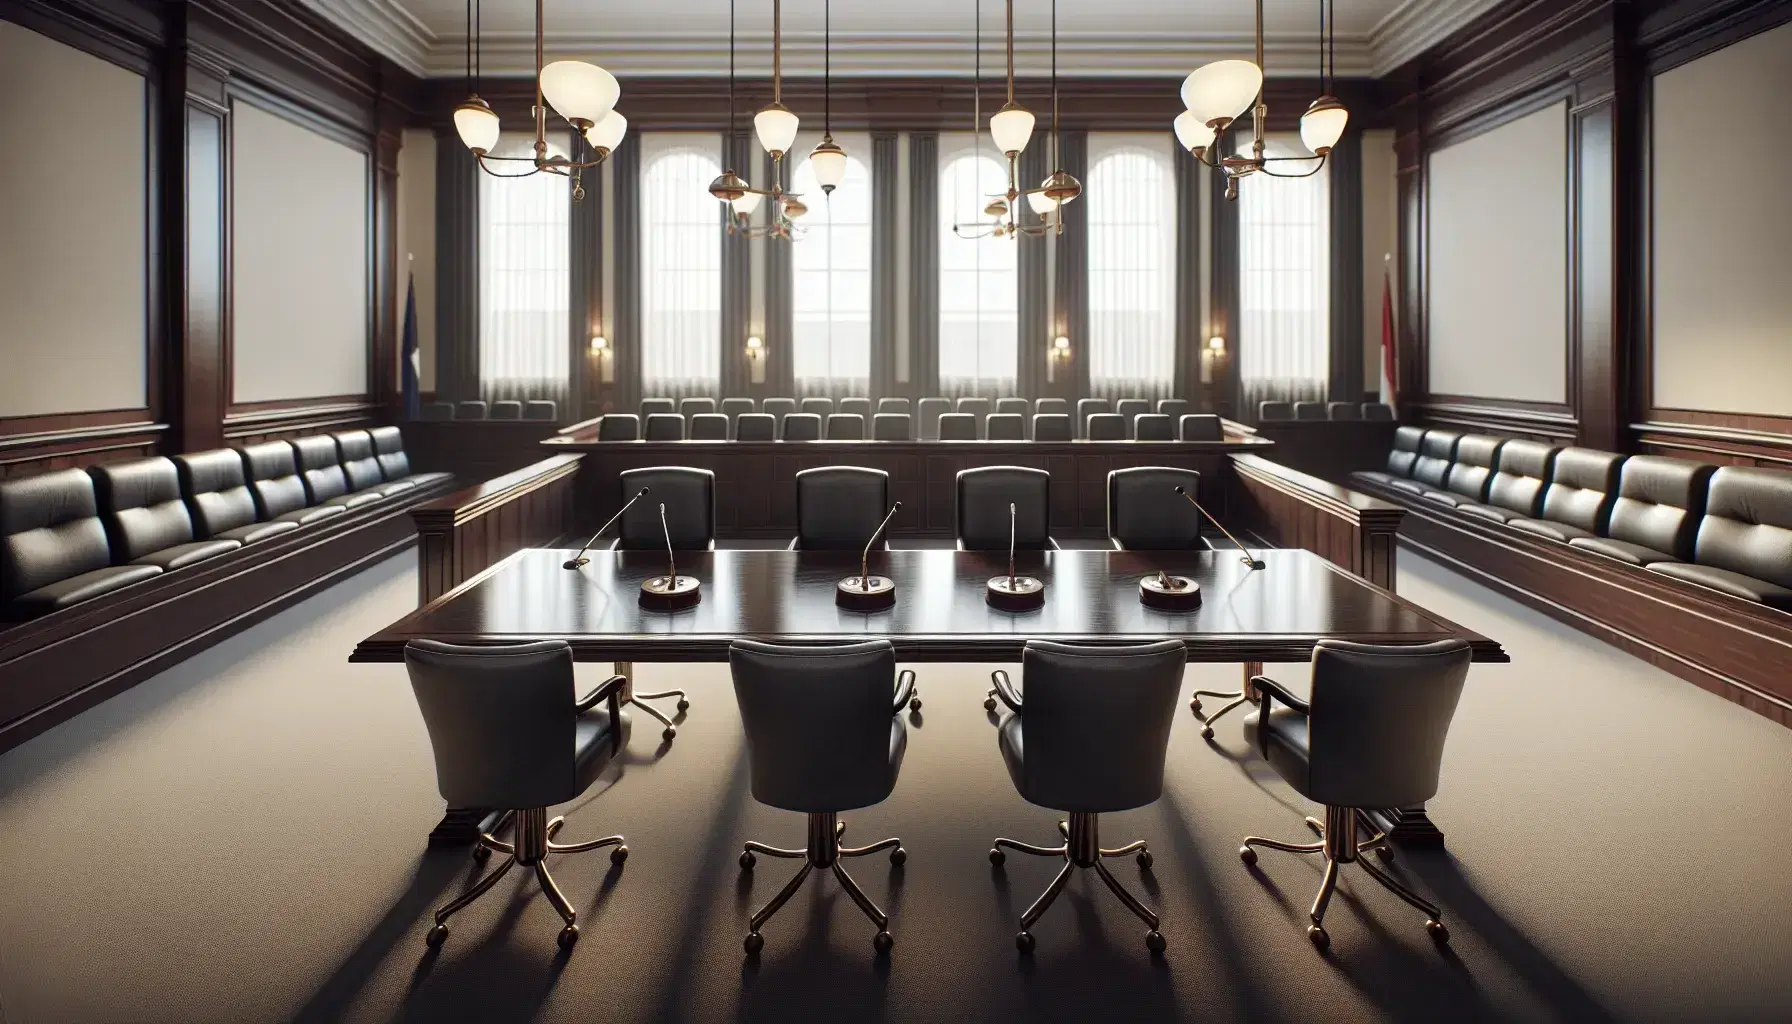 Sala de tribunal administrativo vacía con mesa central de madera oscura, sillas altas de cuero negro para jueces y mesas para abogados con micrófonos.